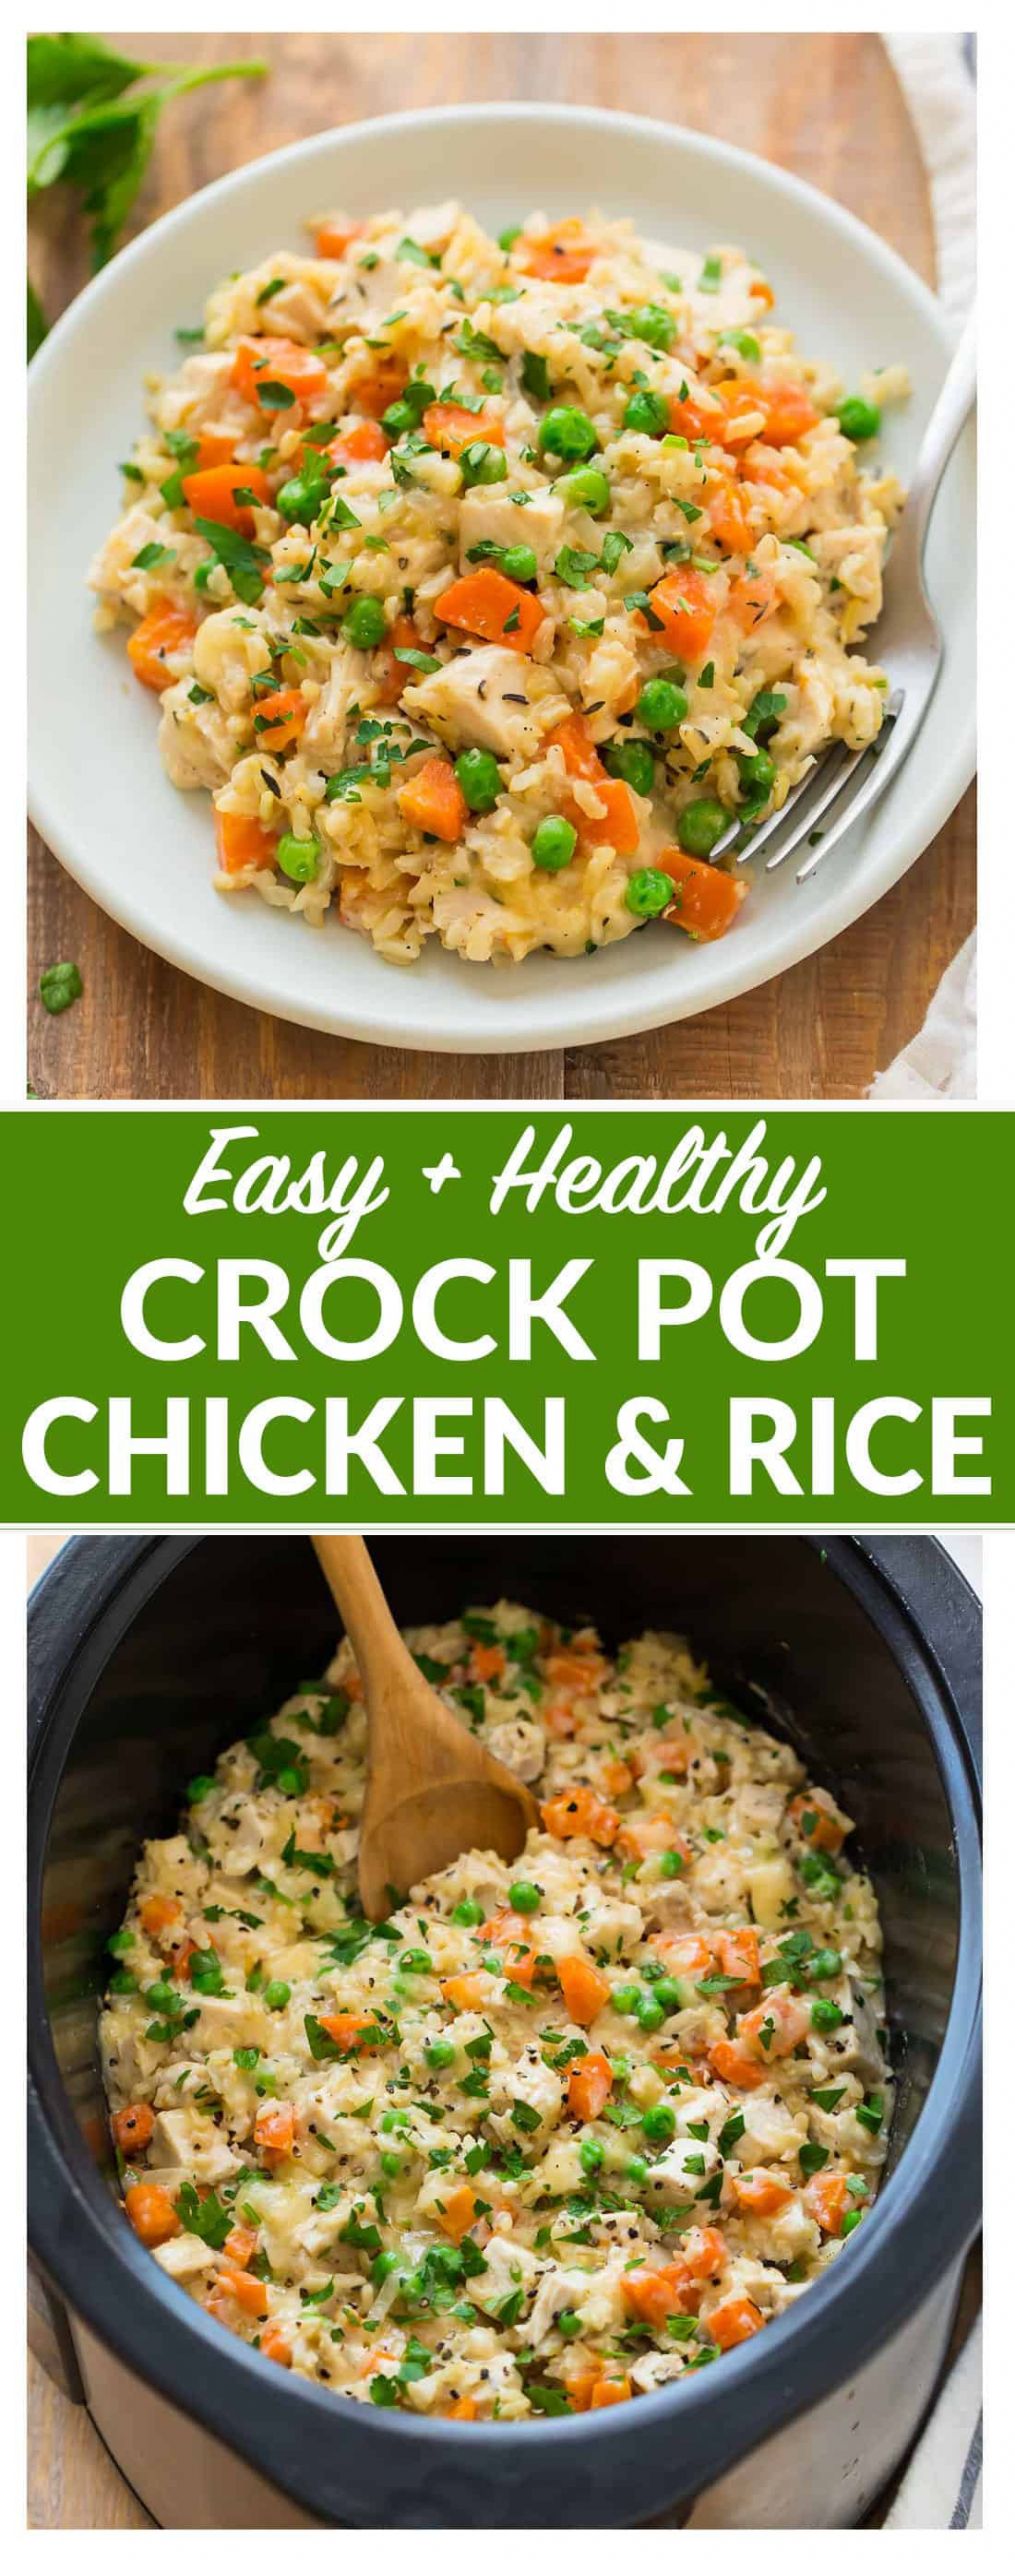 Crock Pot Chicken Casserole Recipe
 Crock Pot Chicken and Rice Recipe